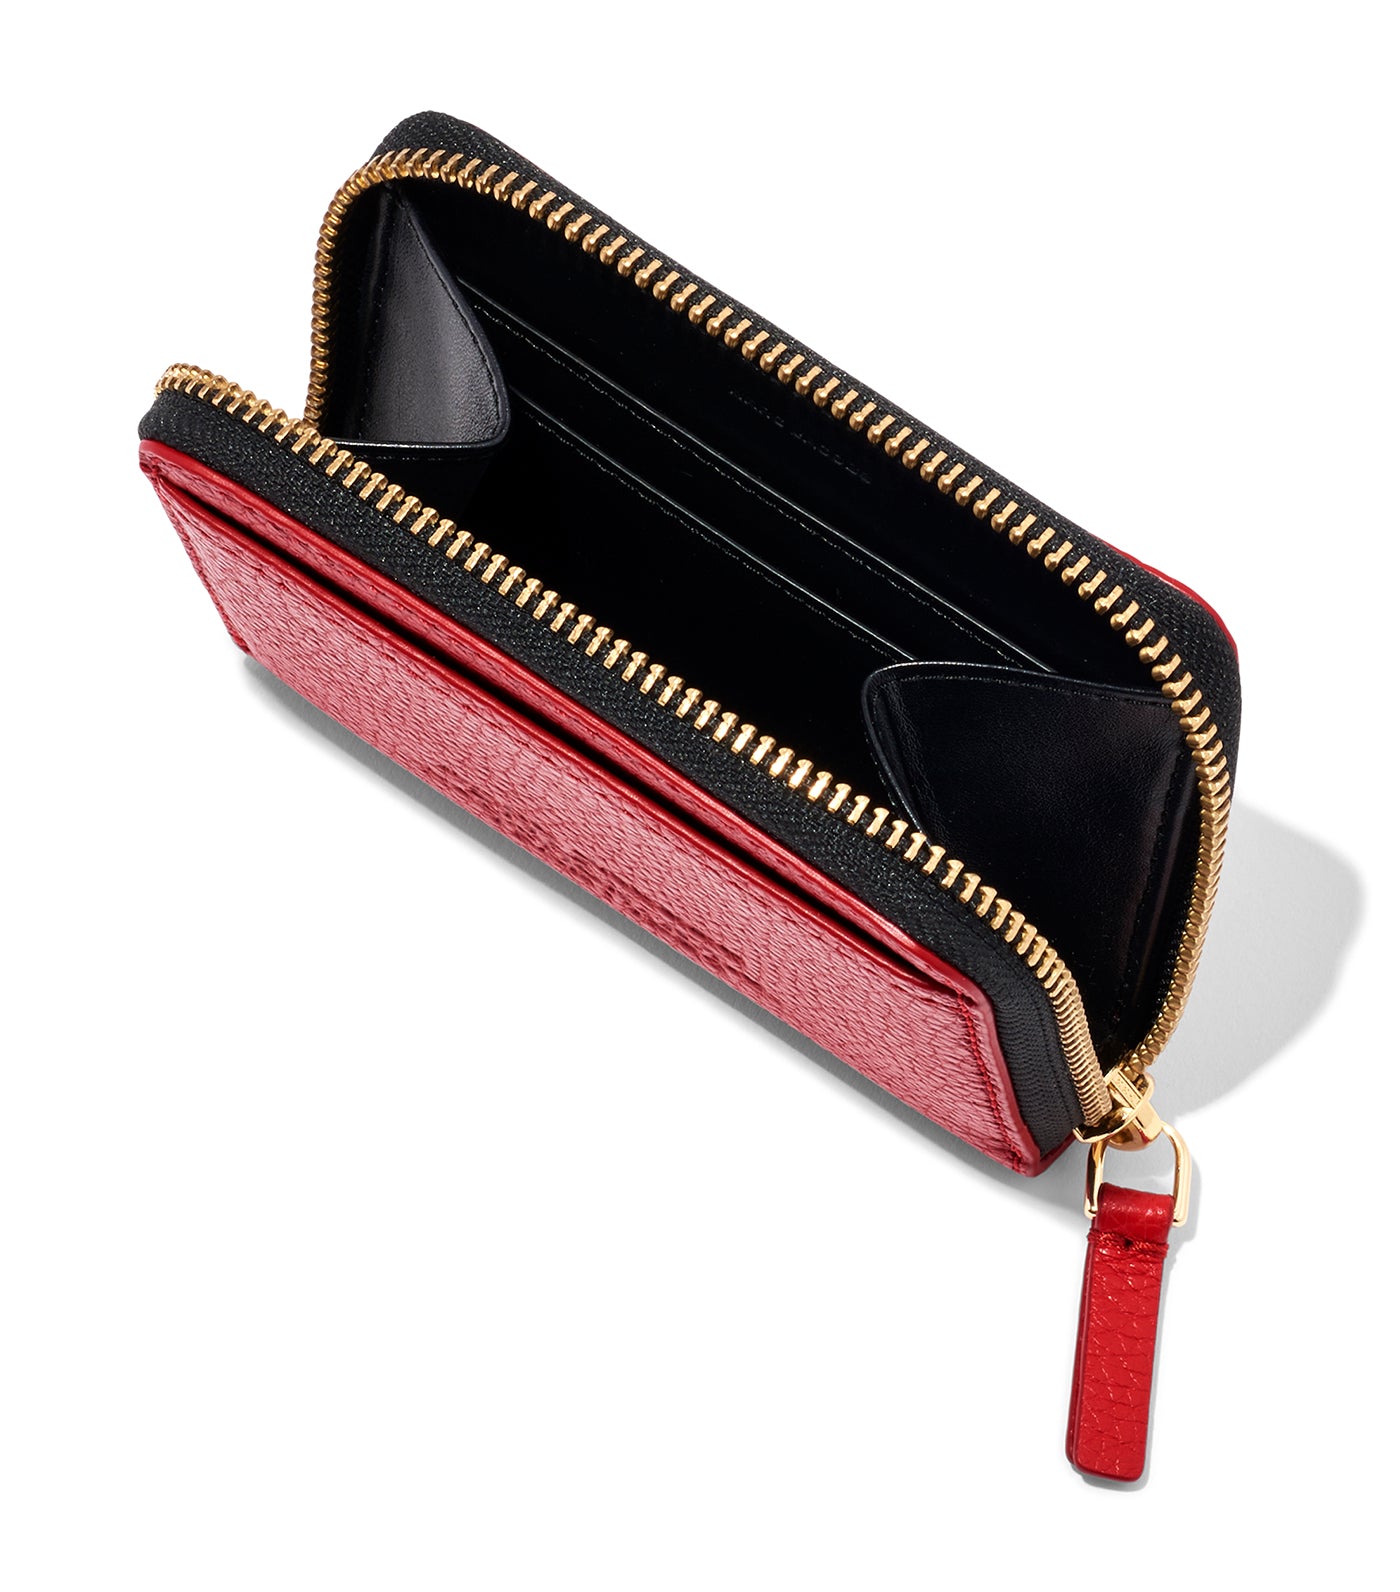 The Leather Zip Around Wallet True Red